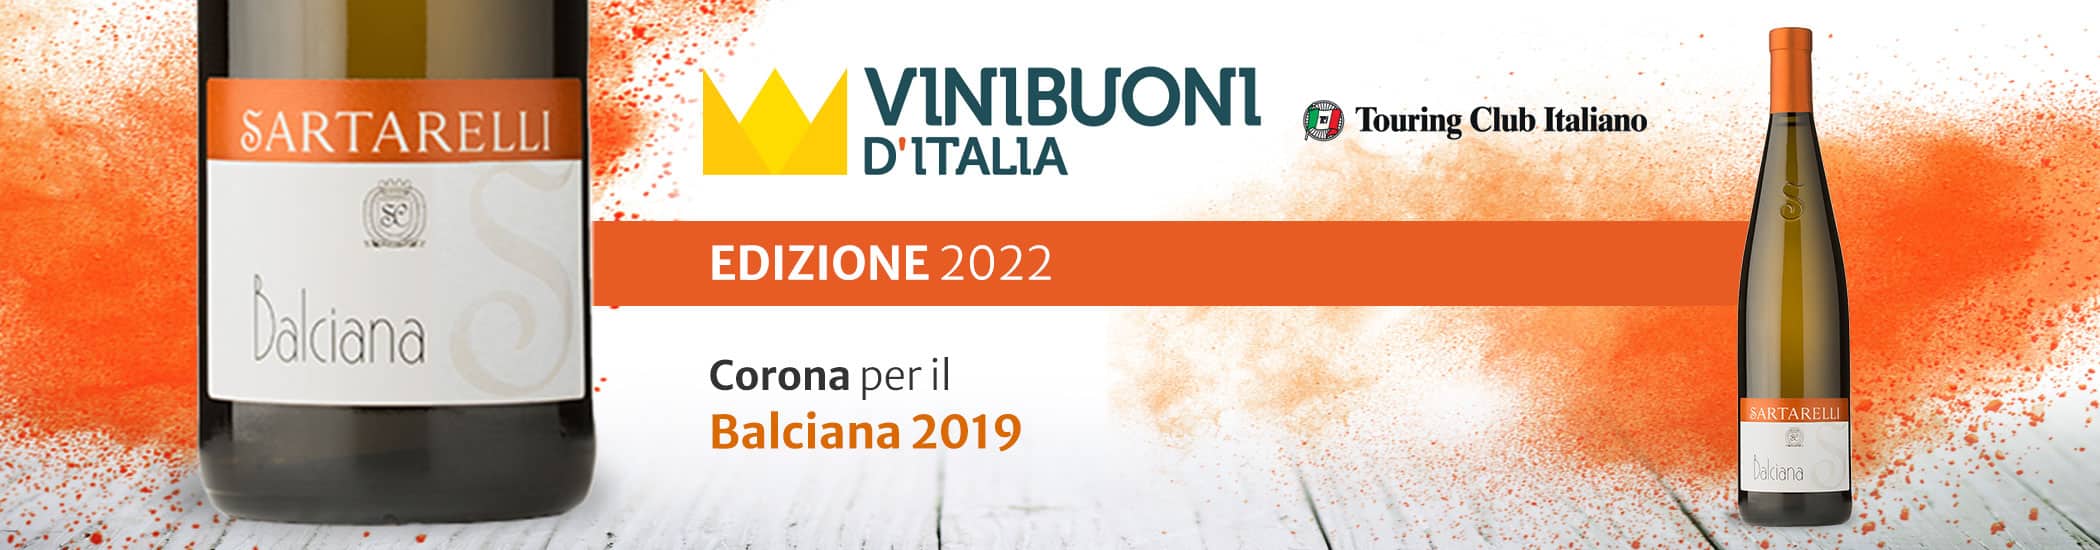 Sartarelli-Balciana 2019-Corona 2022 (News-Ita)